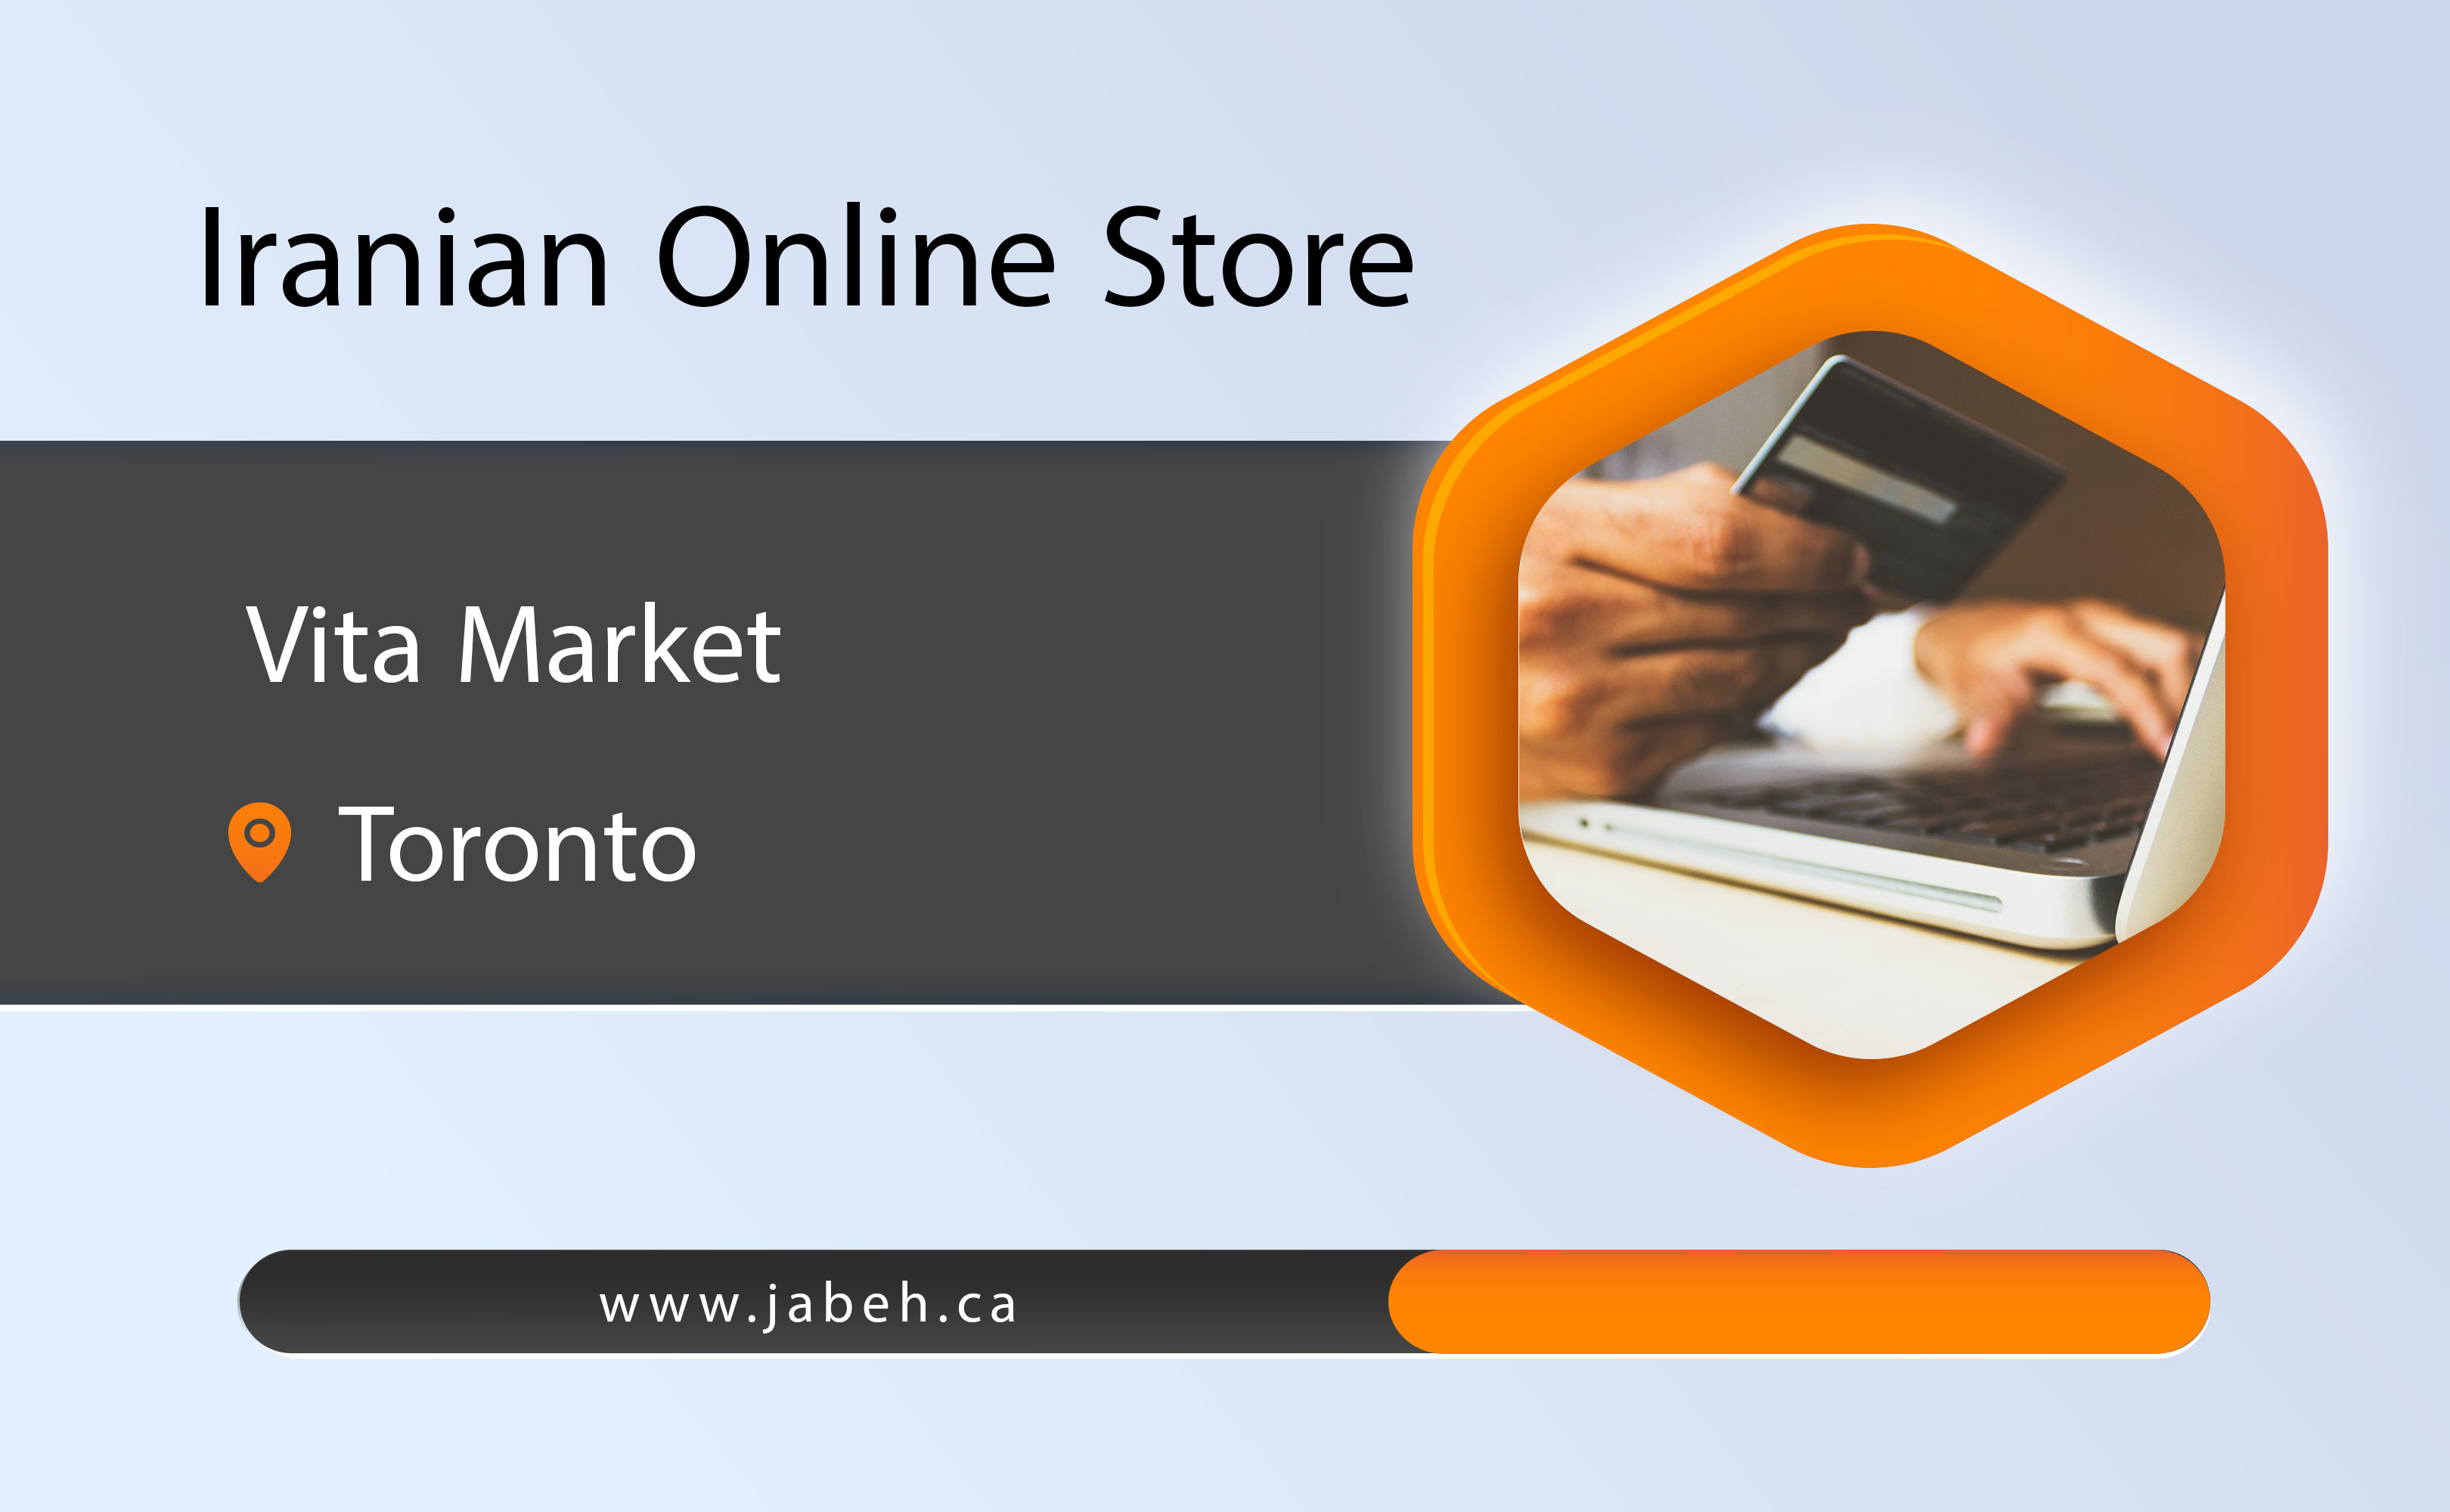 Vita Market Iranian online store in Toronto